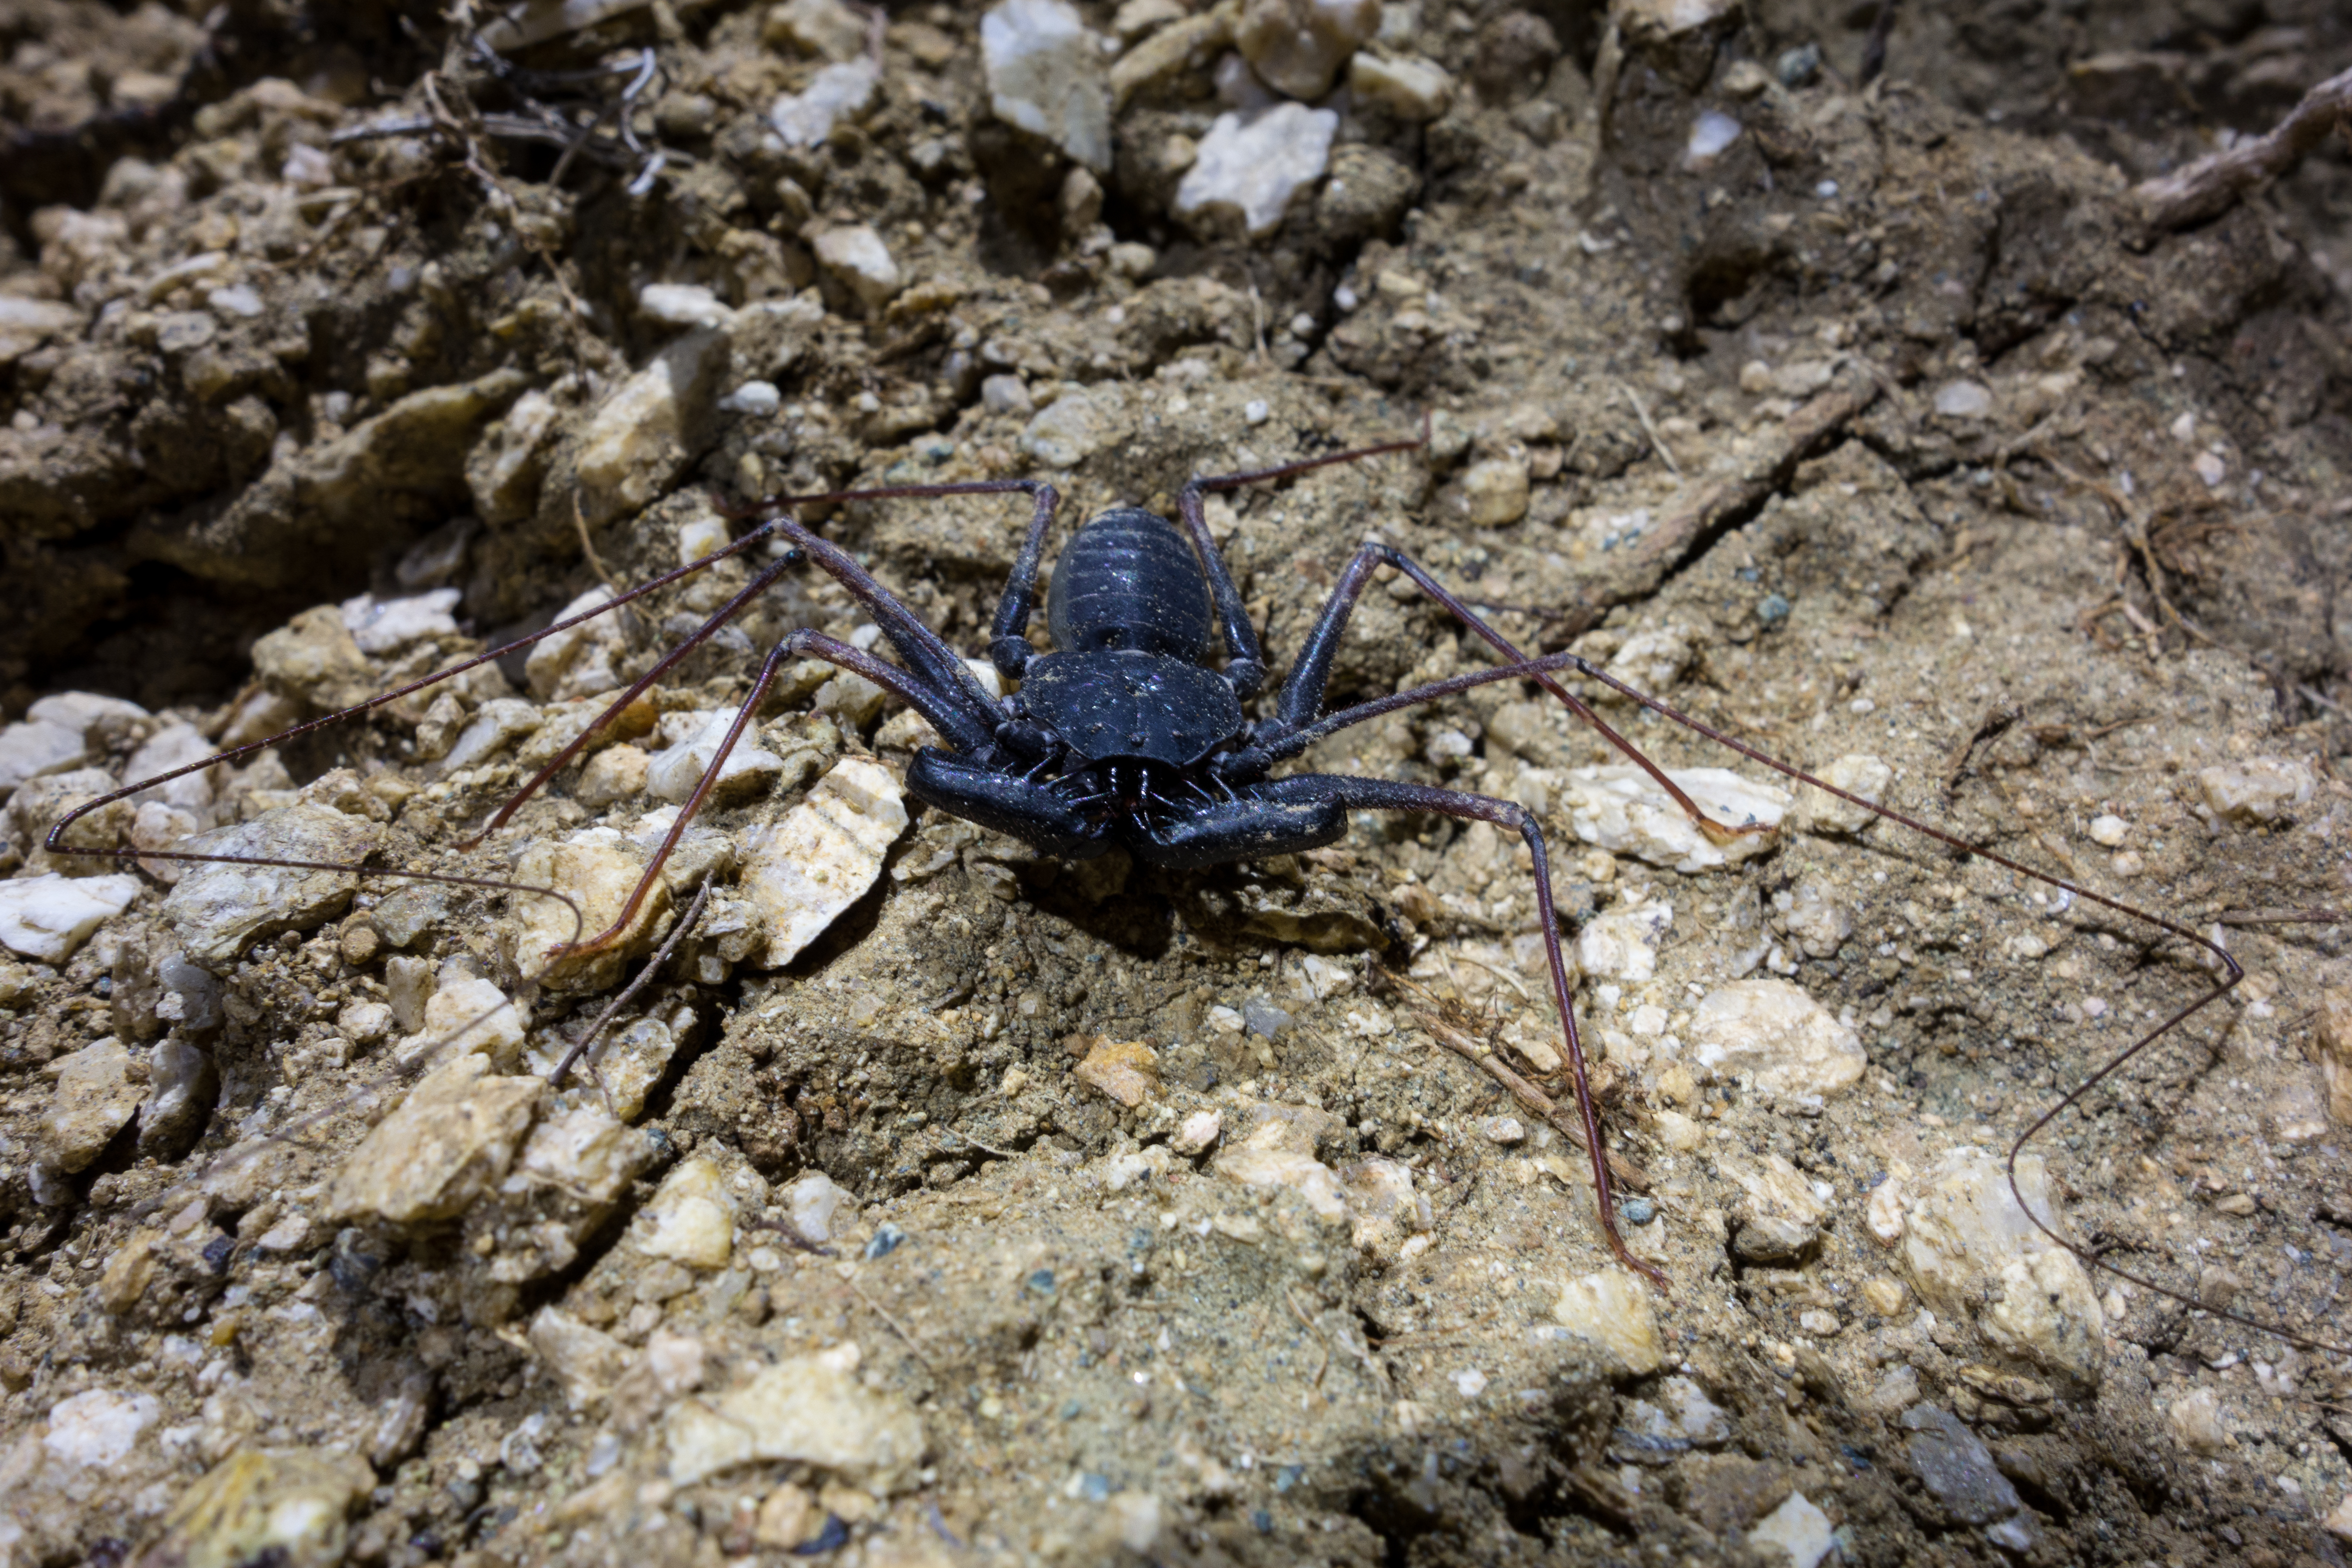 Tailless Whipscorpion on the Blackett's Ridge Trail. August 2015.